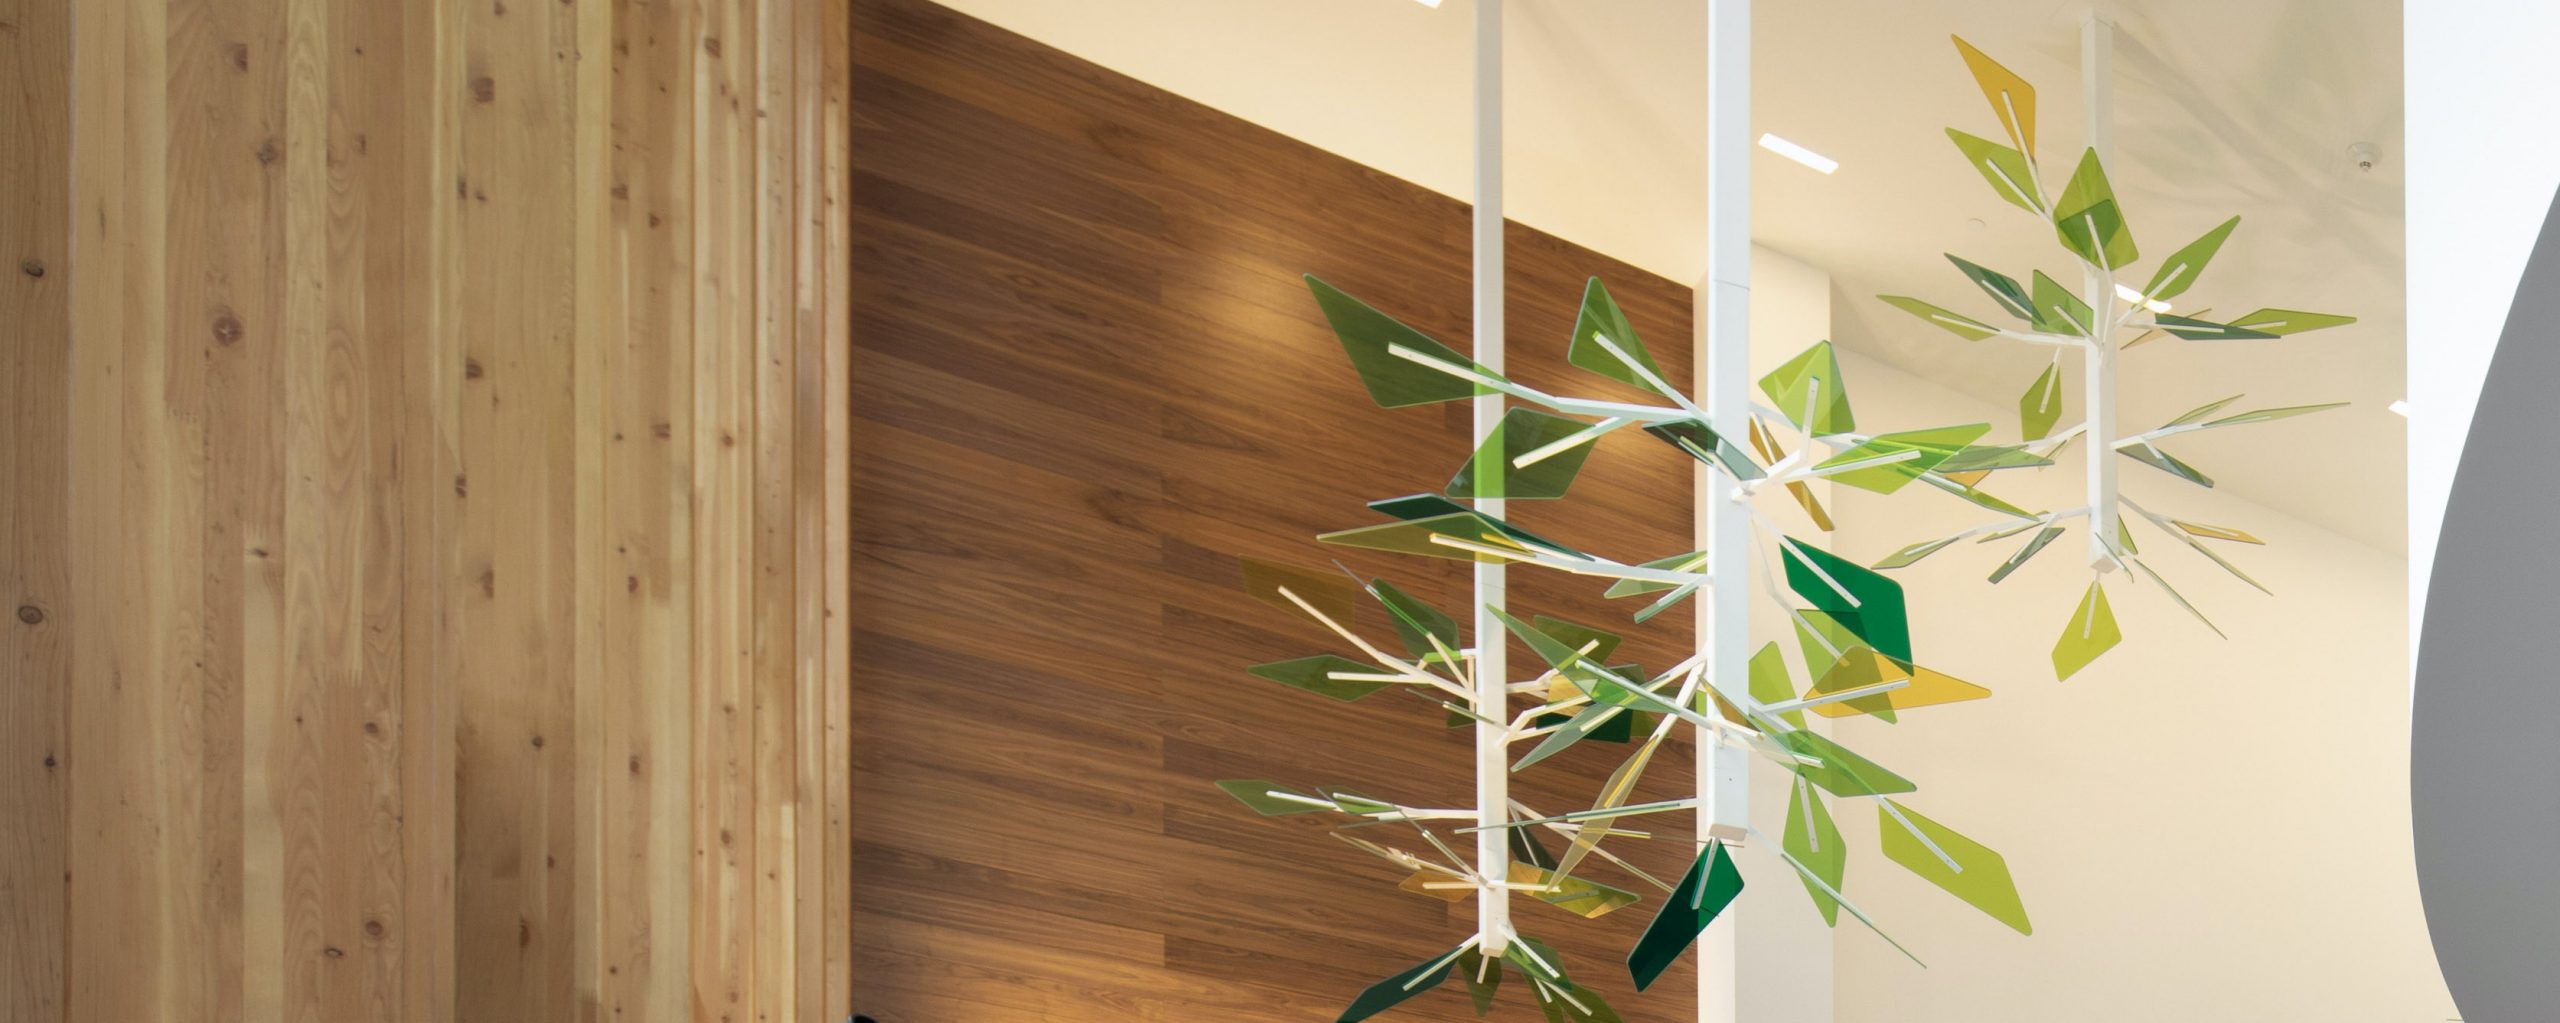 Mass Timber: Moda Tower Lobby